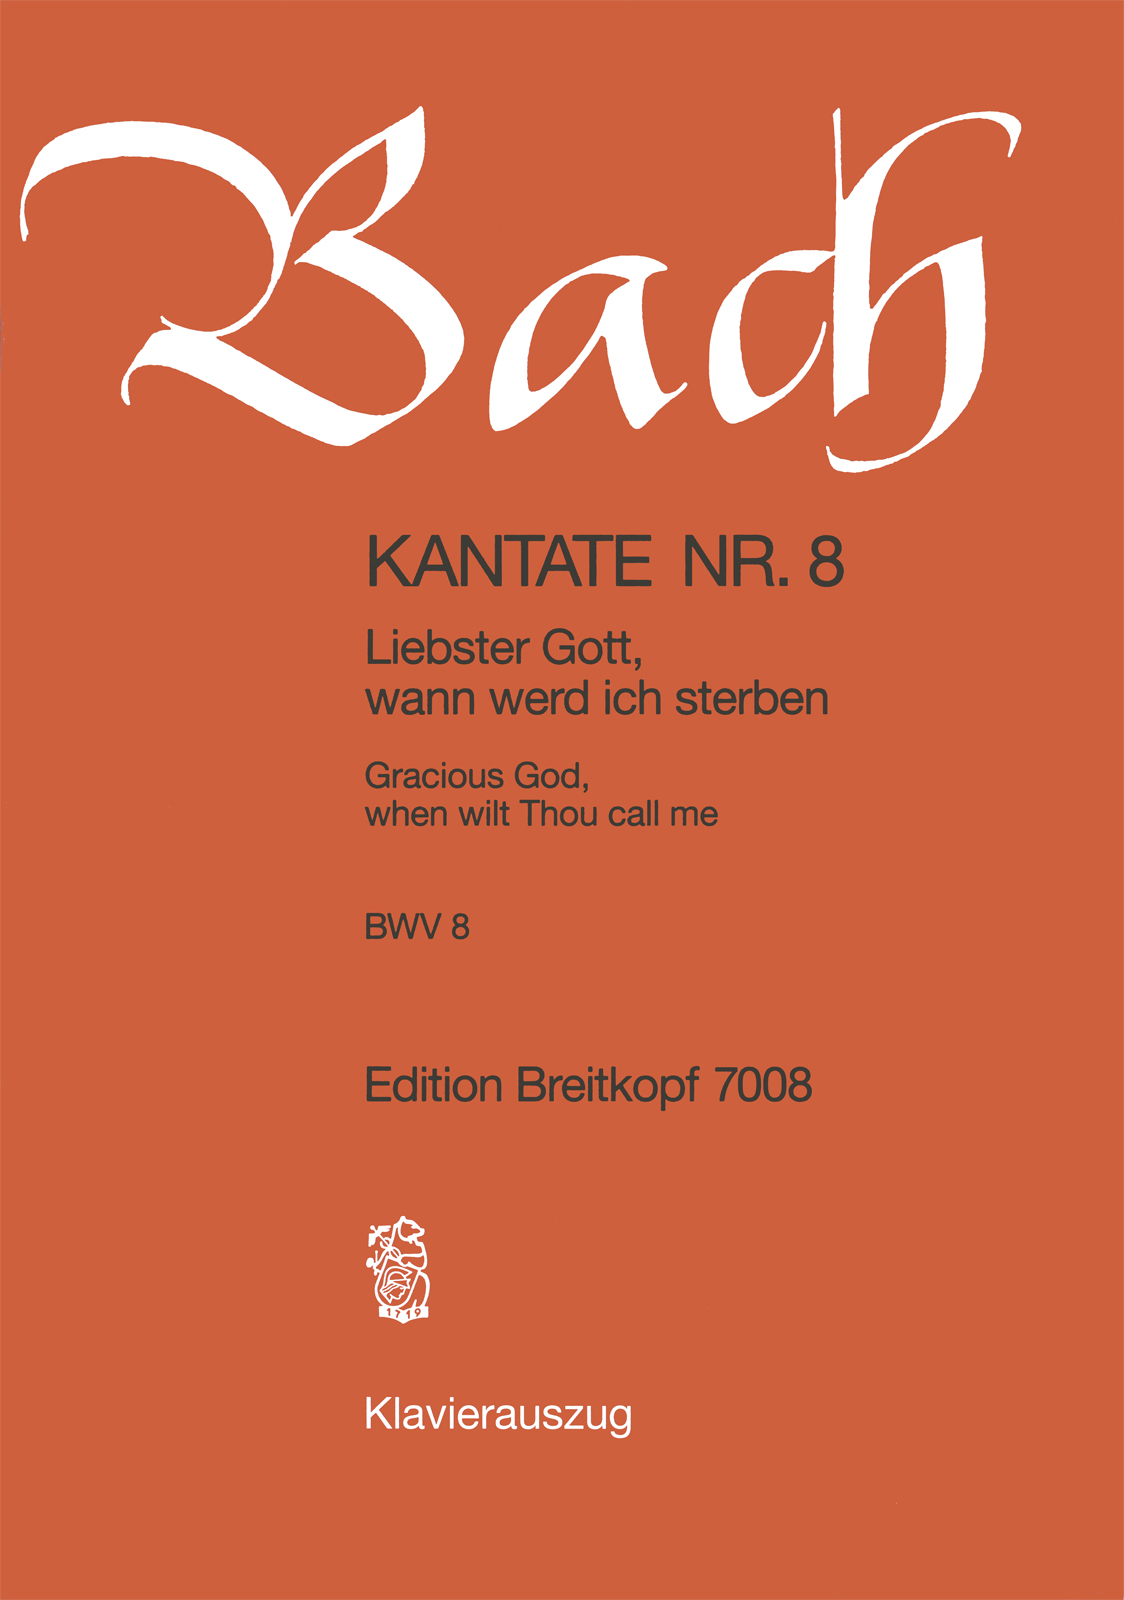 J. S. Bach - KANTATE NR. 8 - LIEBSTER GOTT, WANN WERD ICH STERBEN - BWV 8 - KLAVIERAUSZUG